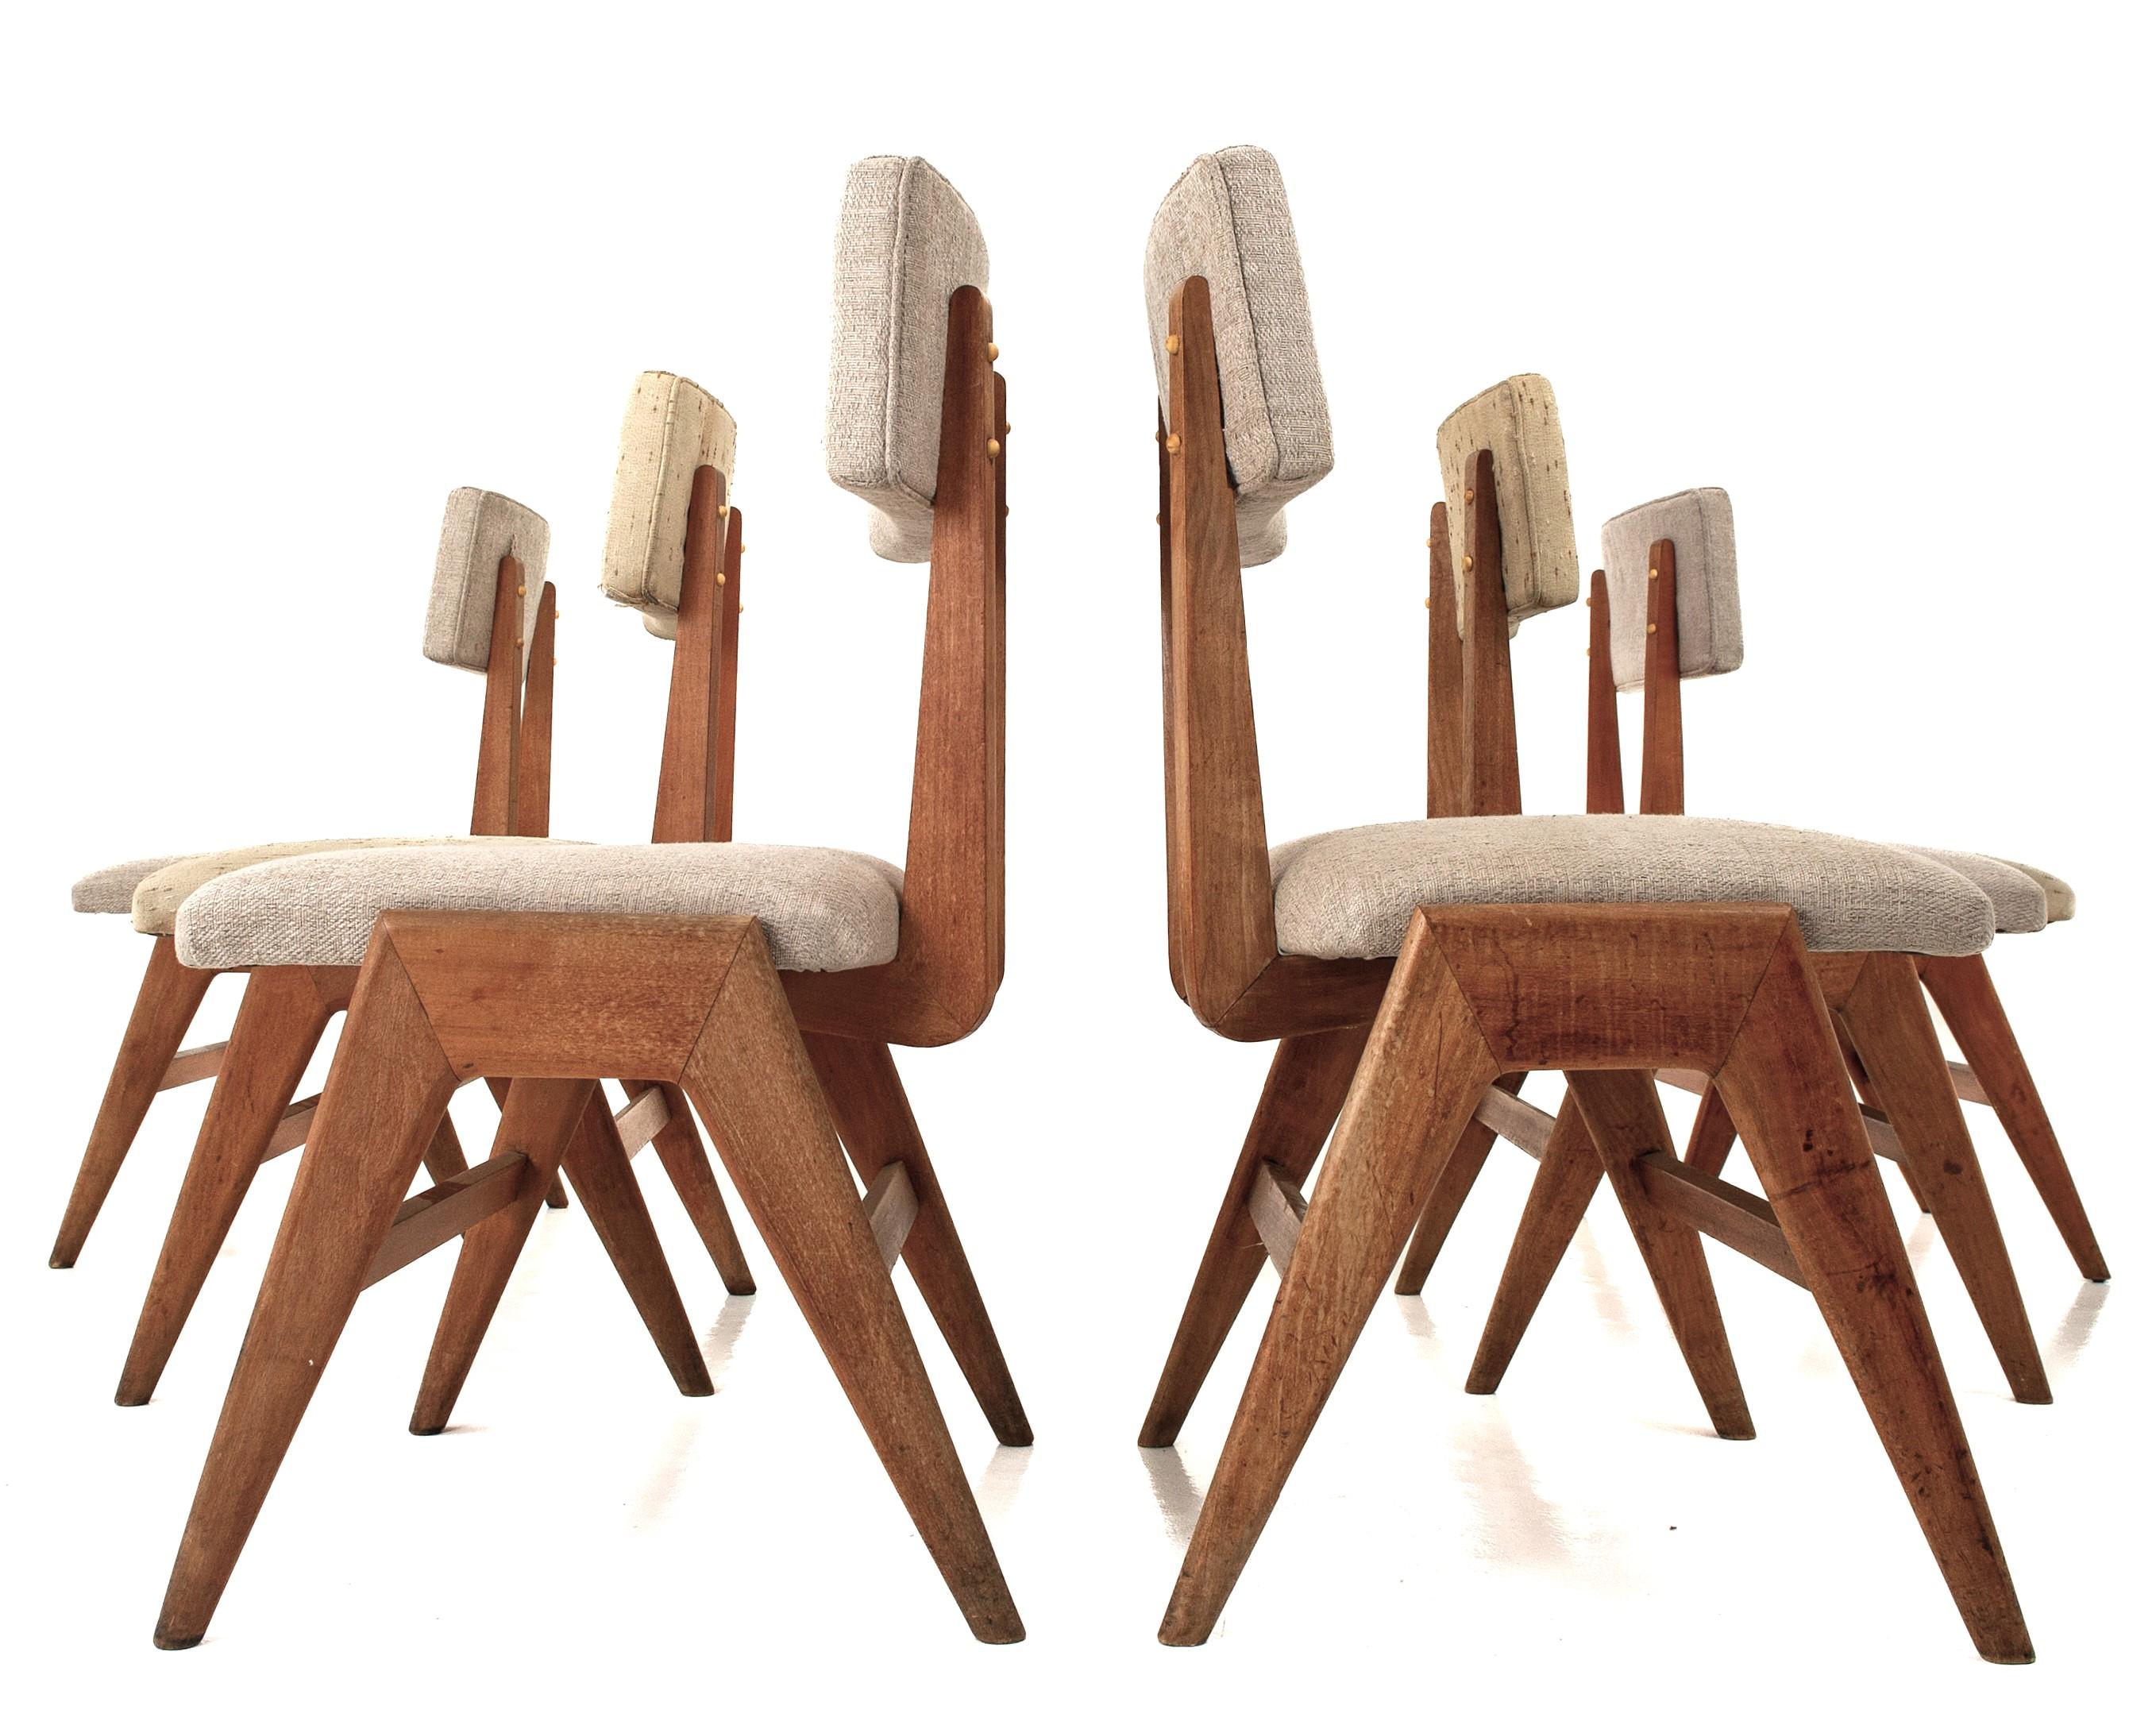 Chairs C10 by Lina Bo Bardi 1